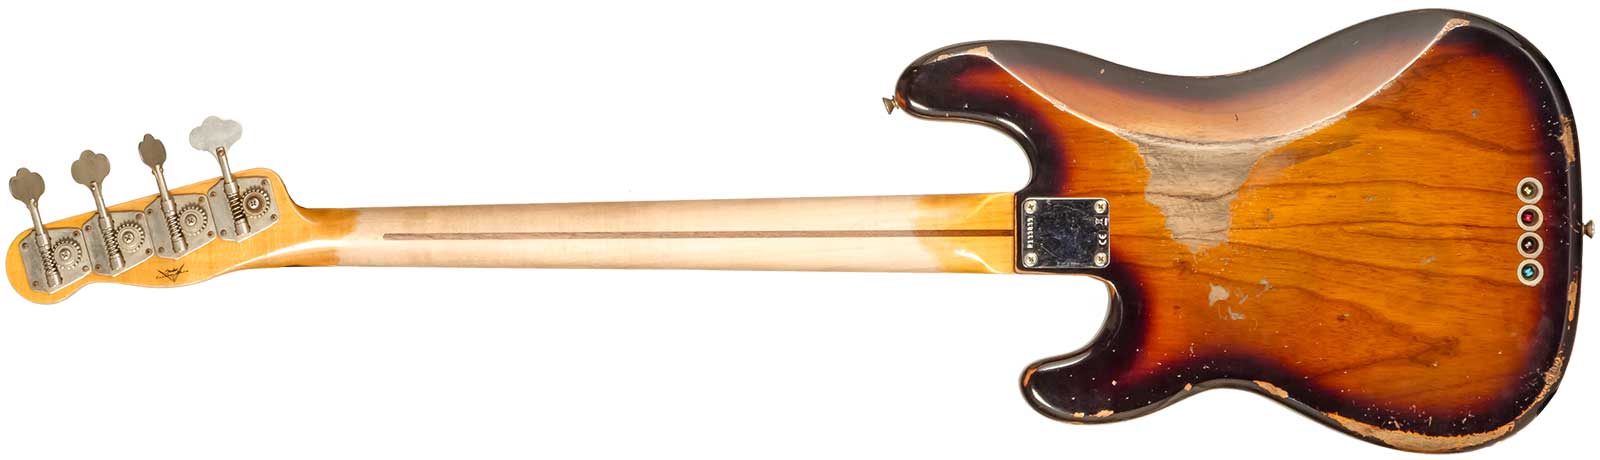 Fender Custom Shop Precision Bass 1955 Mn #r133839 - Heavy Relic 2-color Sunburst - Solid body elektrische bas - Variation 1